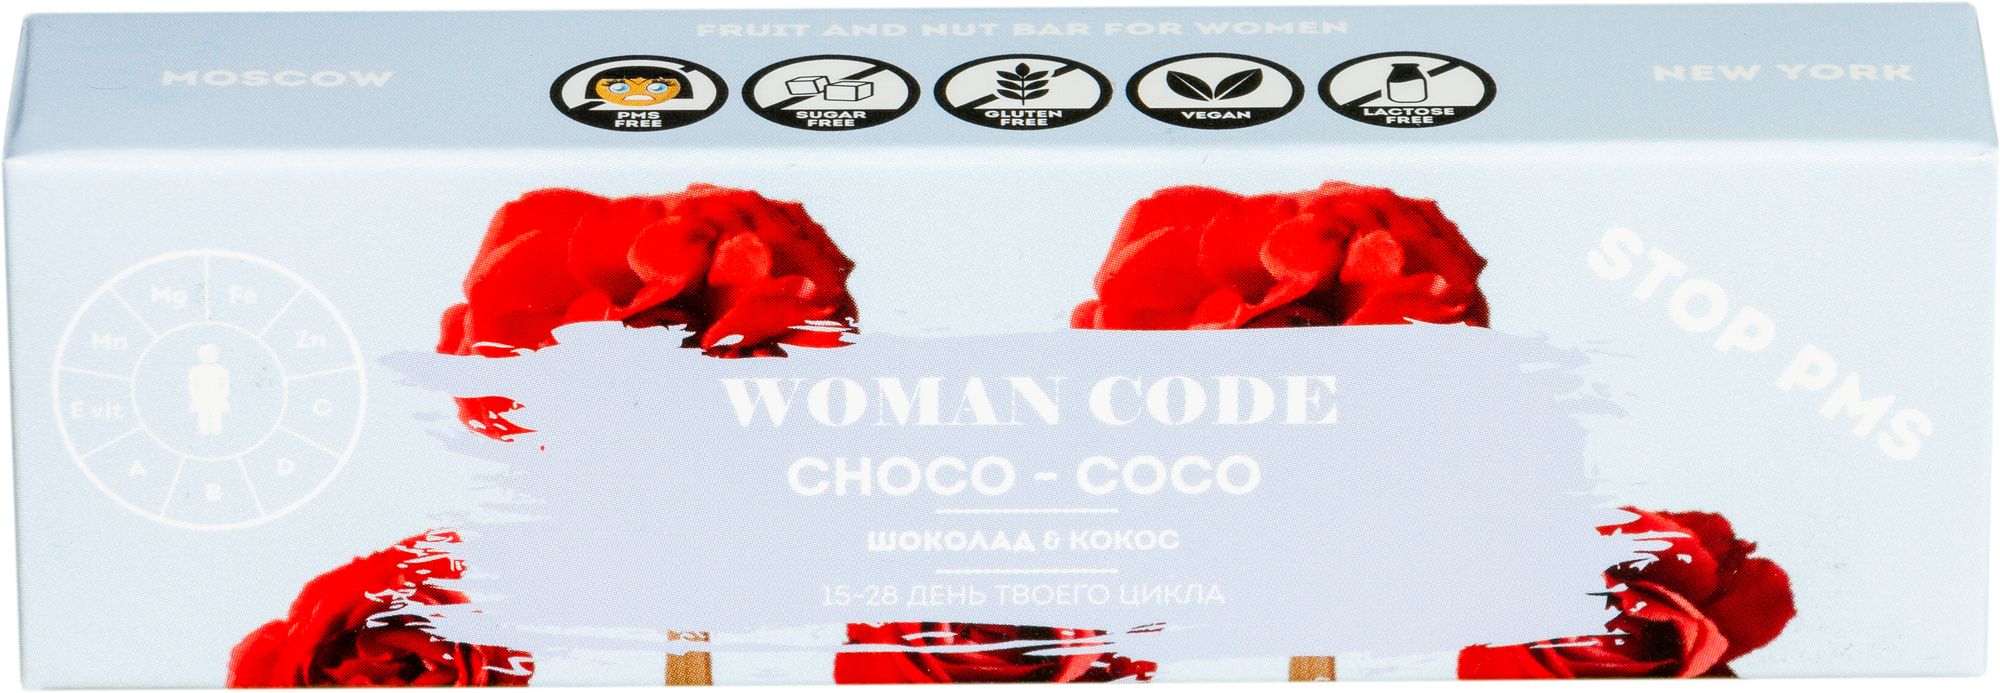 Батончики "WOMAN CODE" ("Вуман Код") Choco-Coco (Шоколад и Кокос), Stop PMS Фаза 2, 7 шт по 45 г, без сахара - фотография № 3